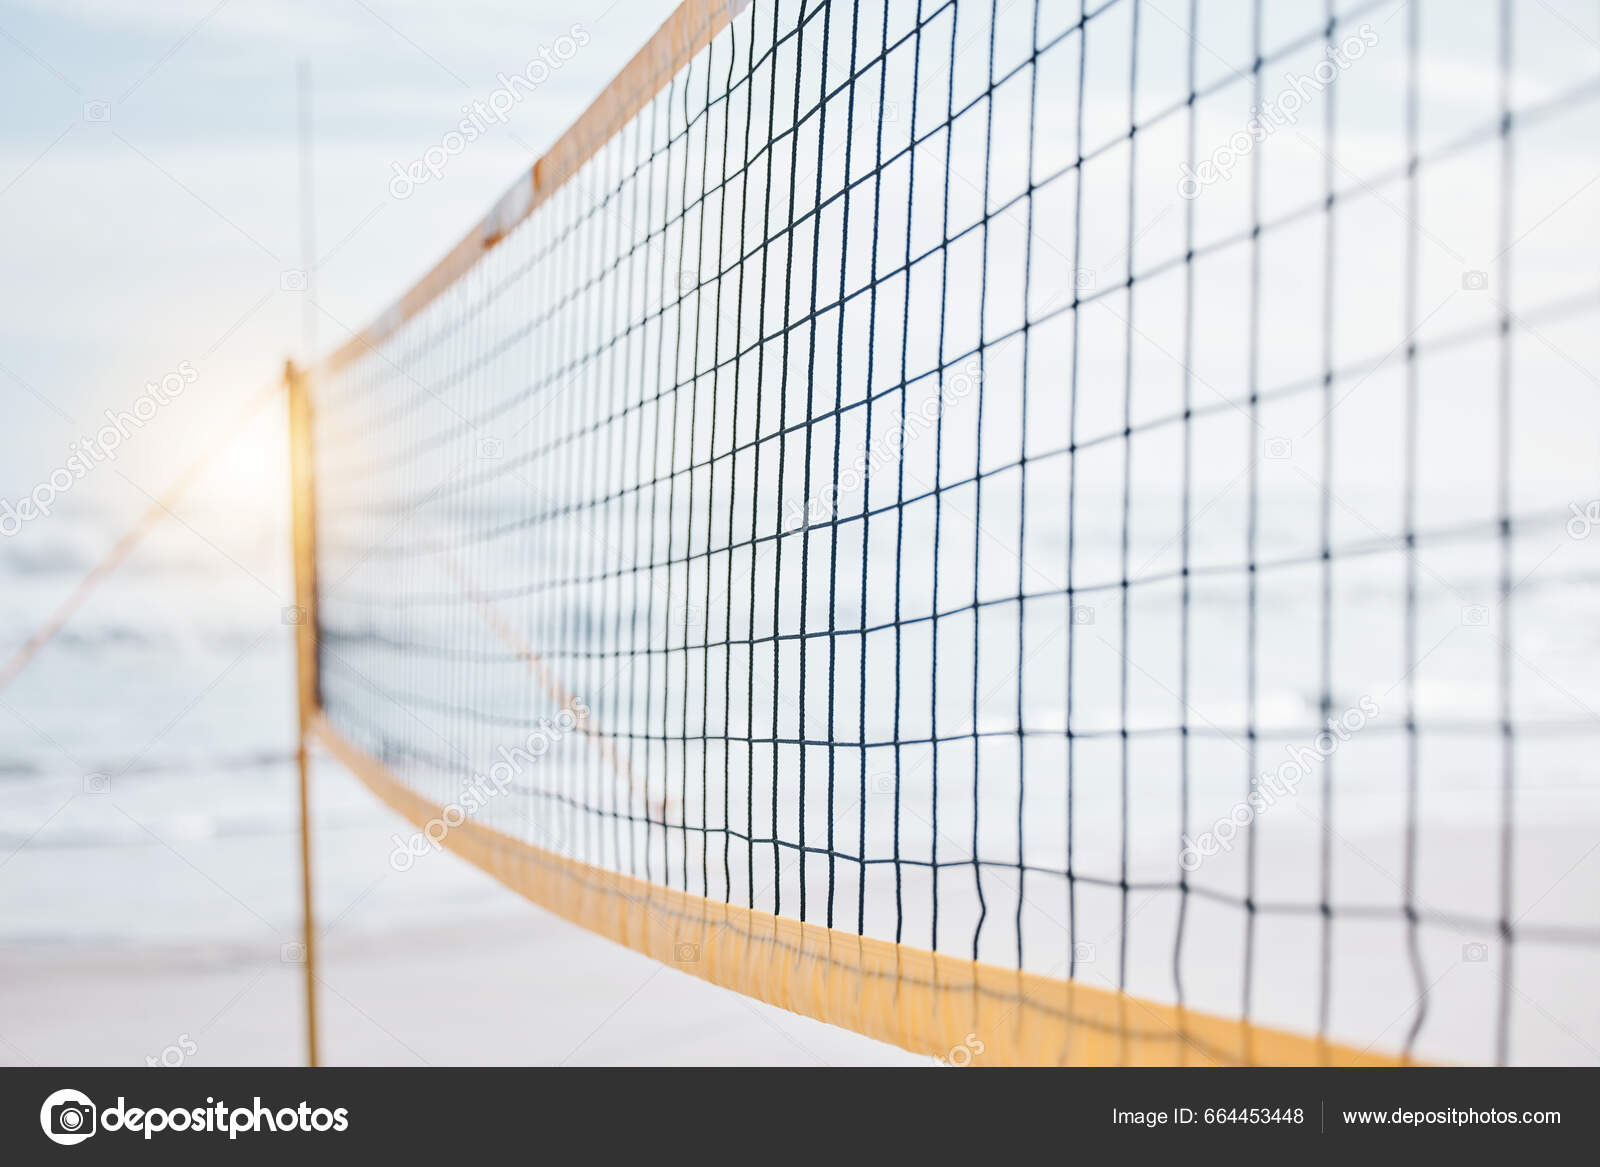 indoor volleyball net background